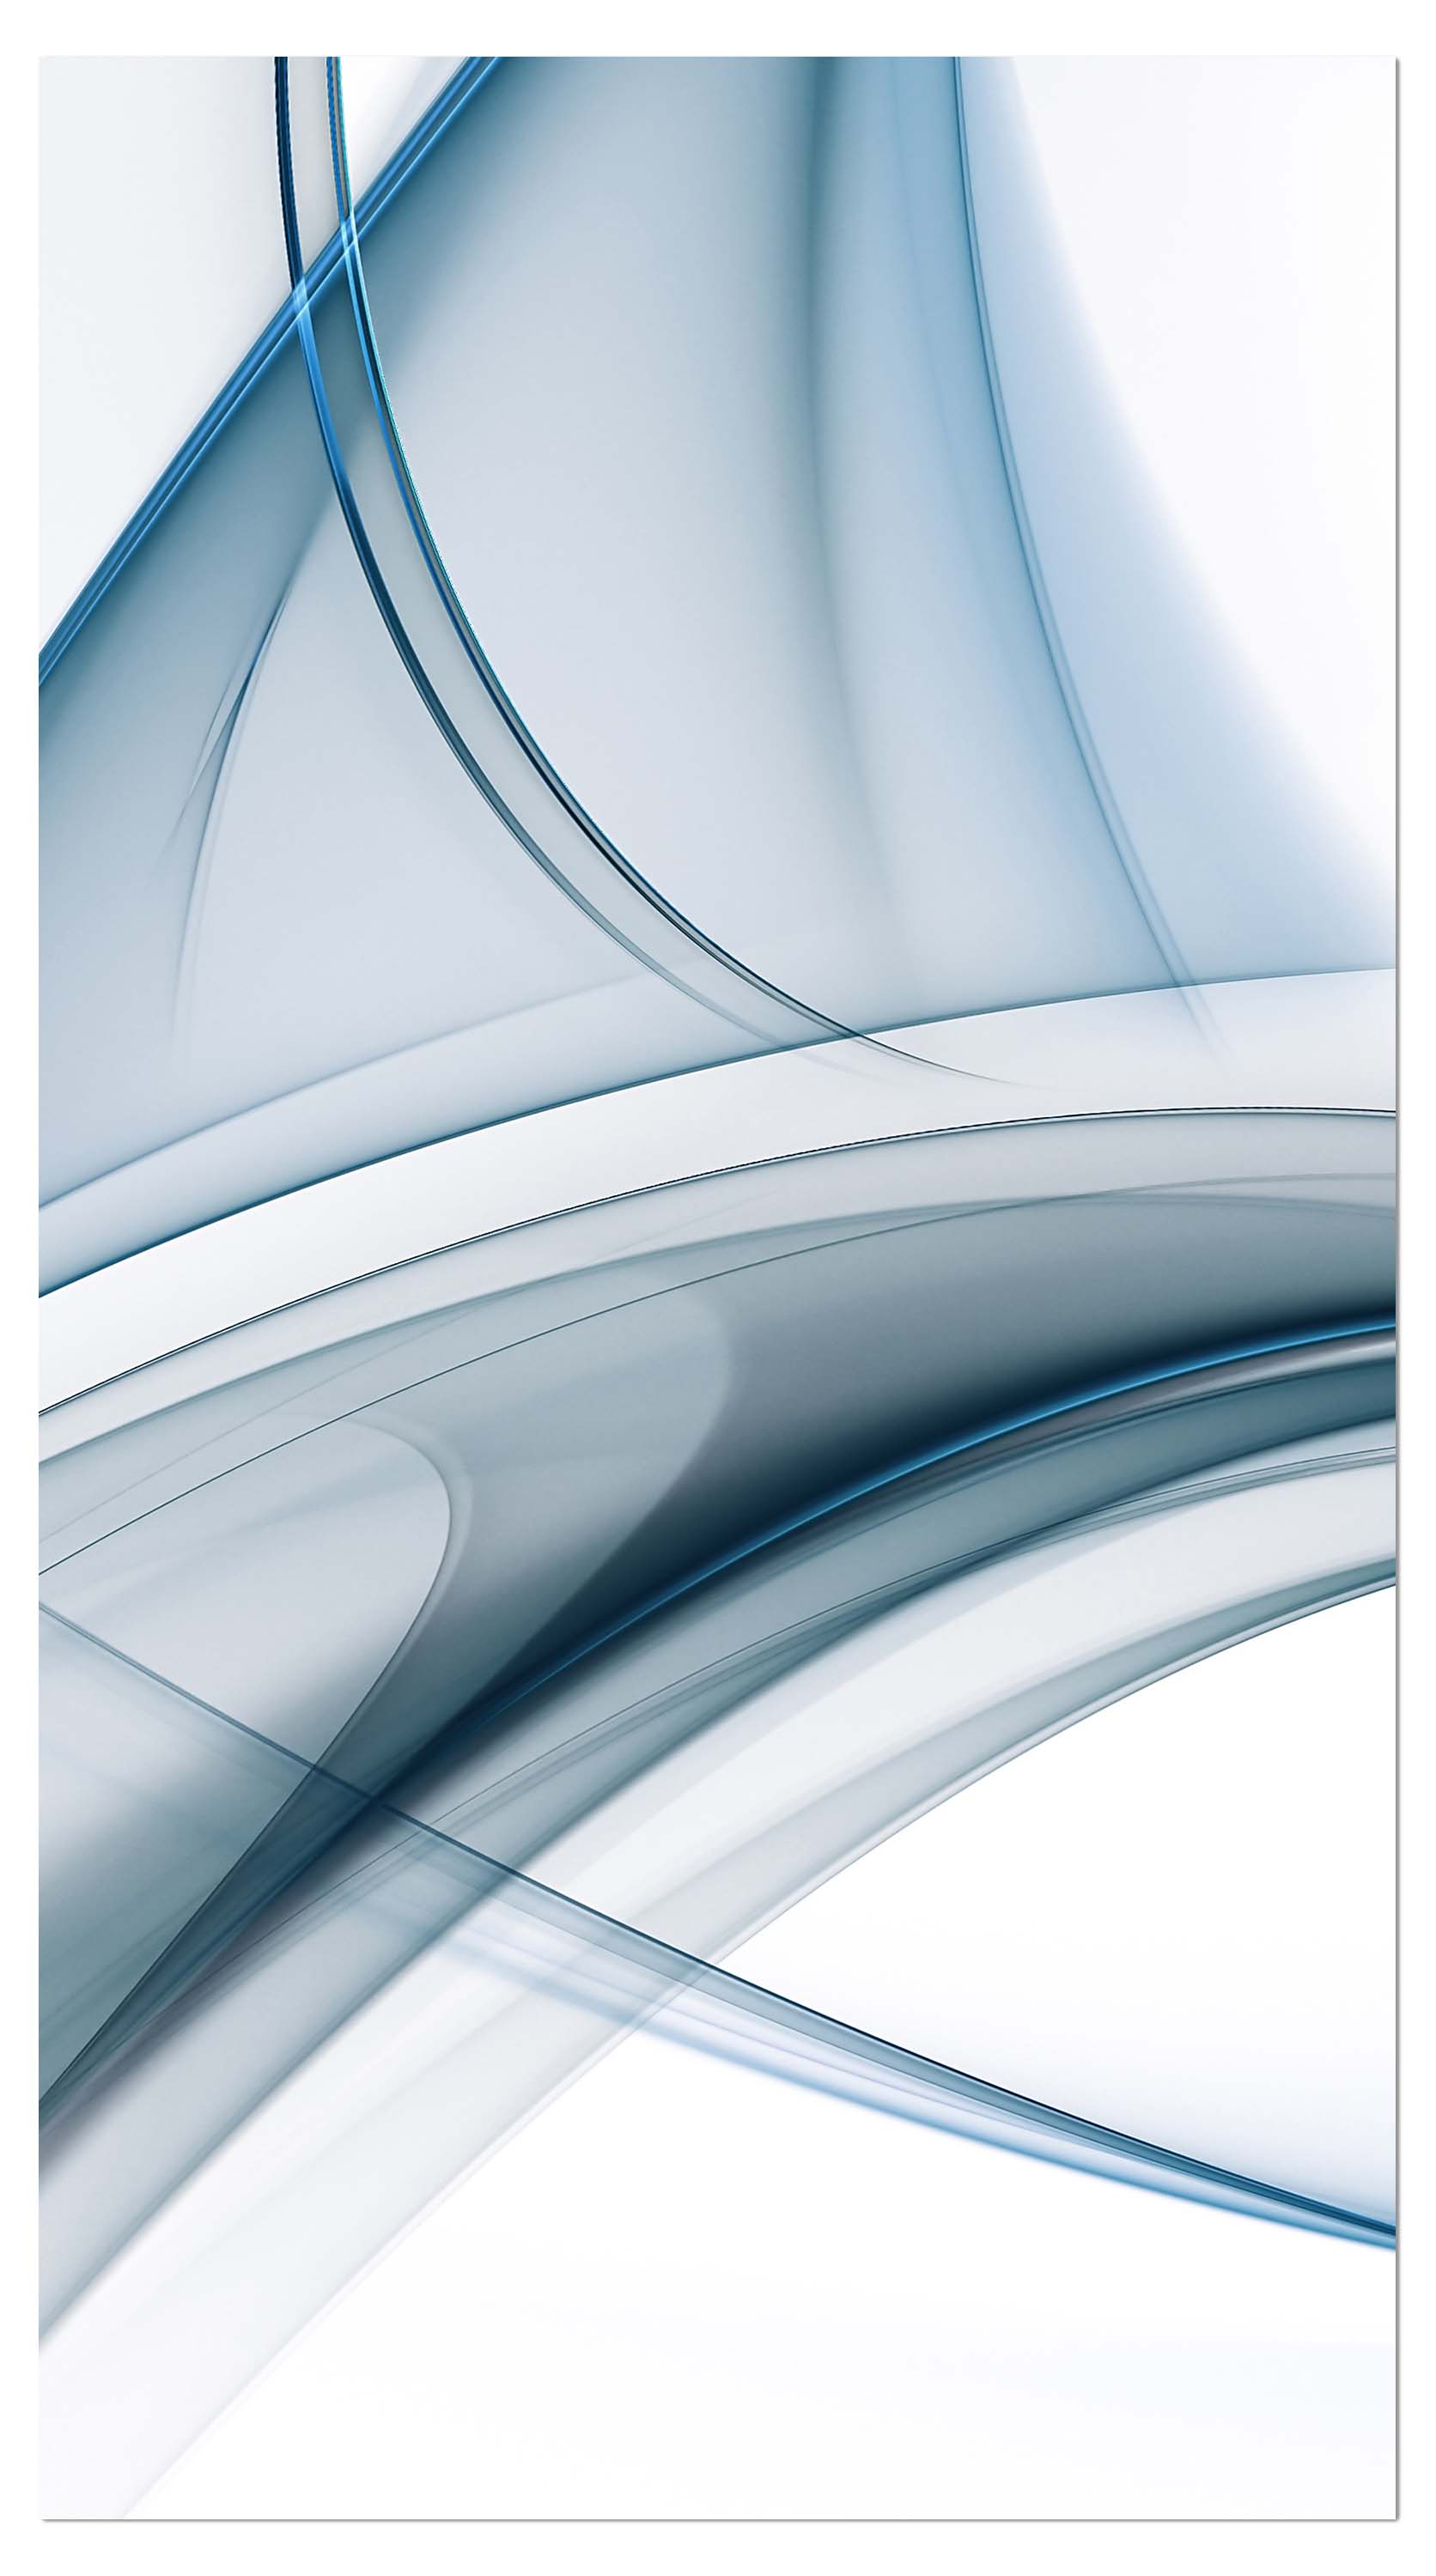 Garderobe Blaue Glaswelle M0307 entdecken - Bild 4